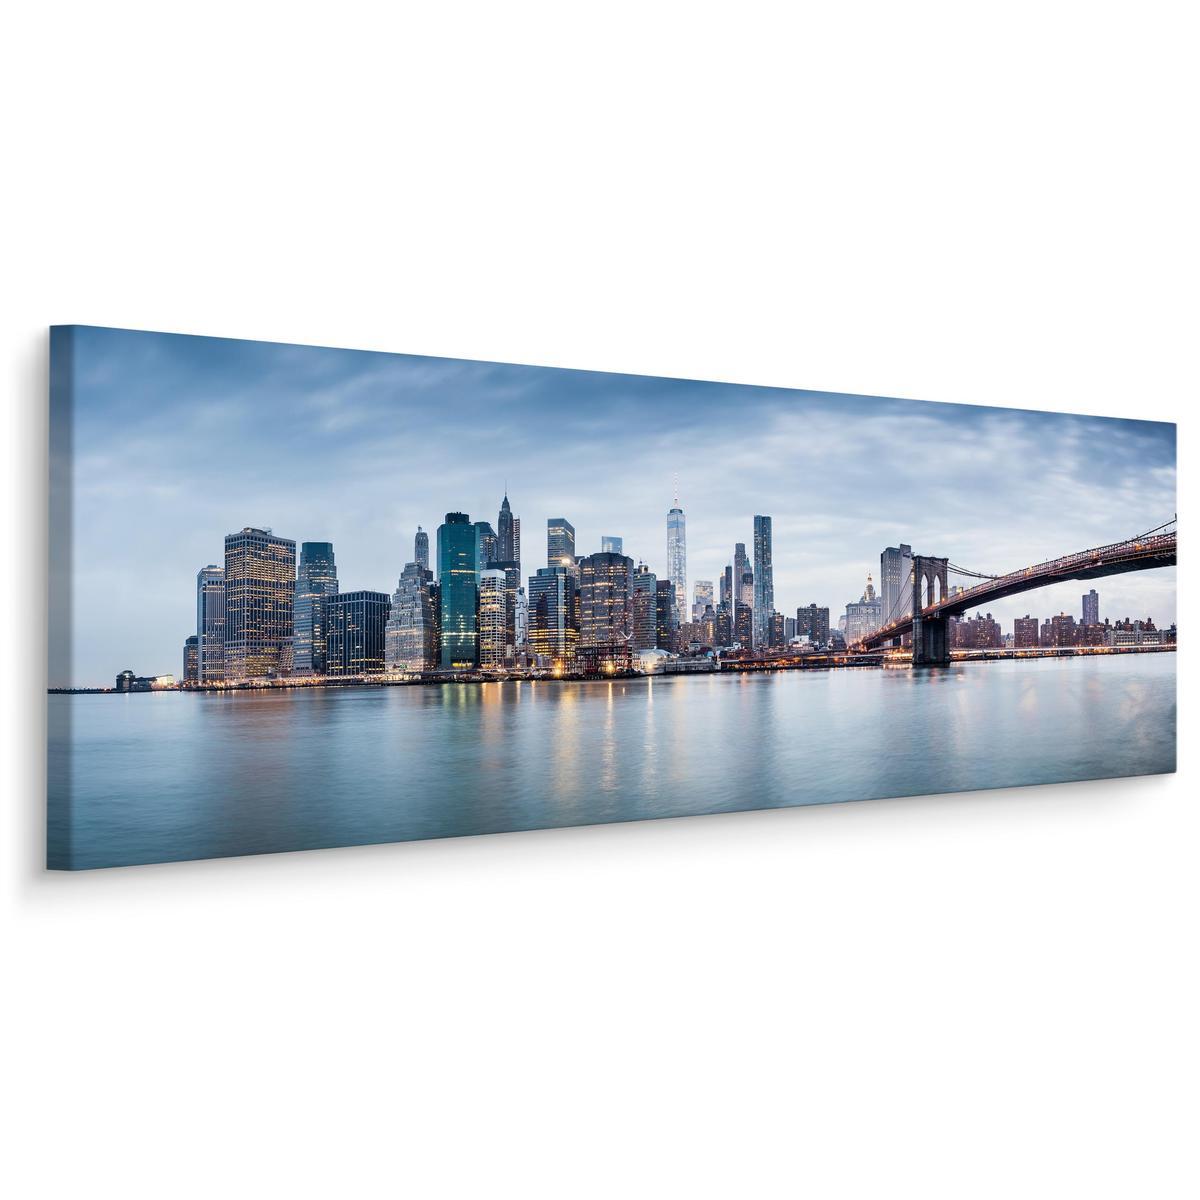 Obraz Do Jadalni PANORAMA Nowego Yorku Miasto Ocean Most 145x45cm 0 Full Screen